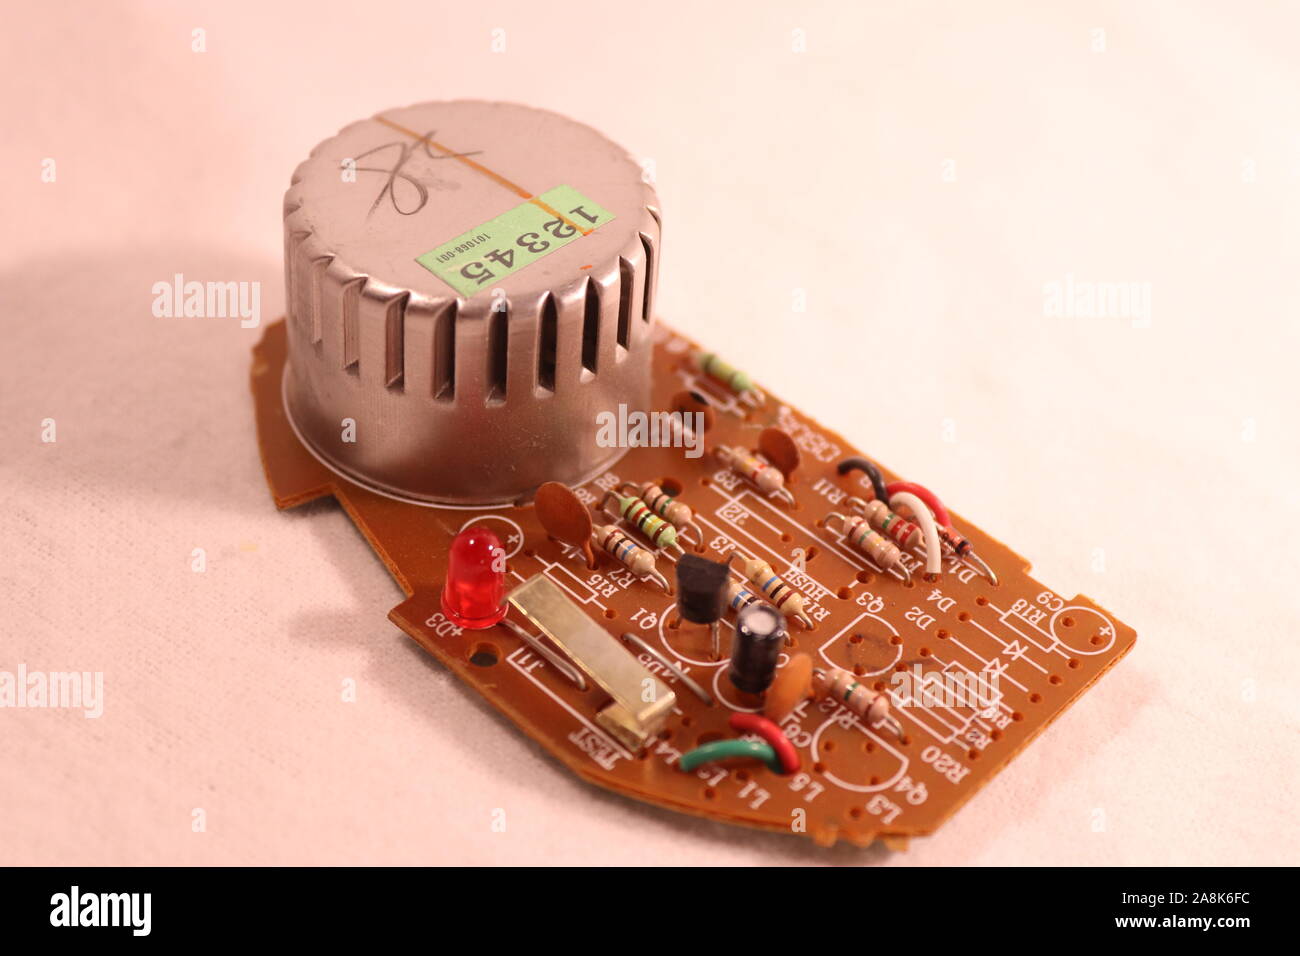 The circuit board of a Kiddie Smoke Detector circa 2007 Stock Photo